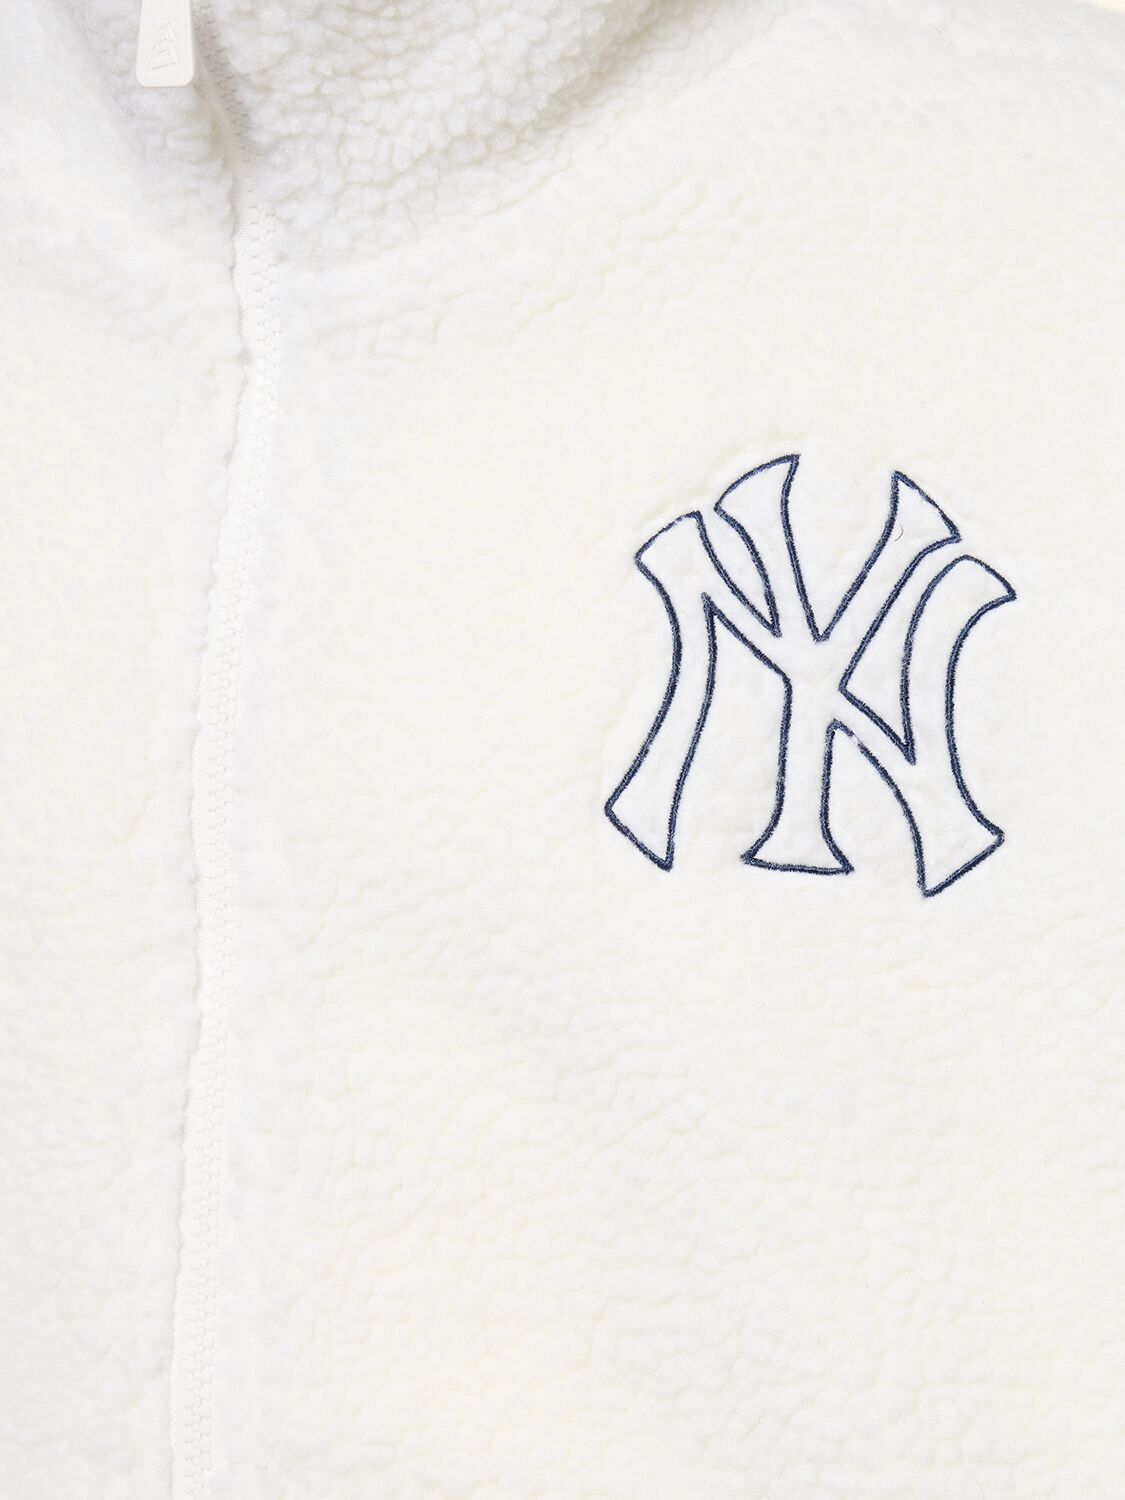 Shop New Era Mlb Ny Yankees Tech Sherpa Jacket In White,black